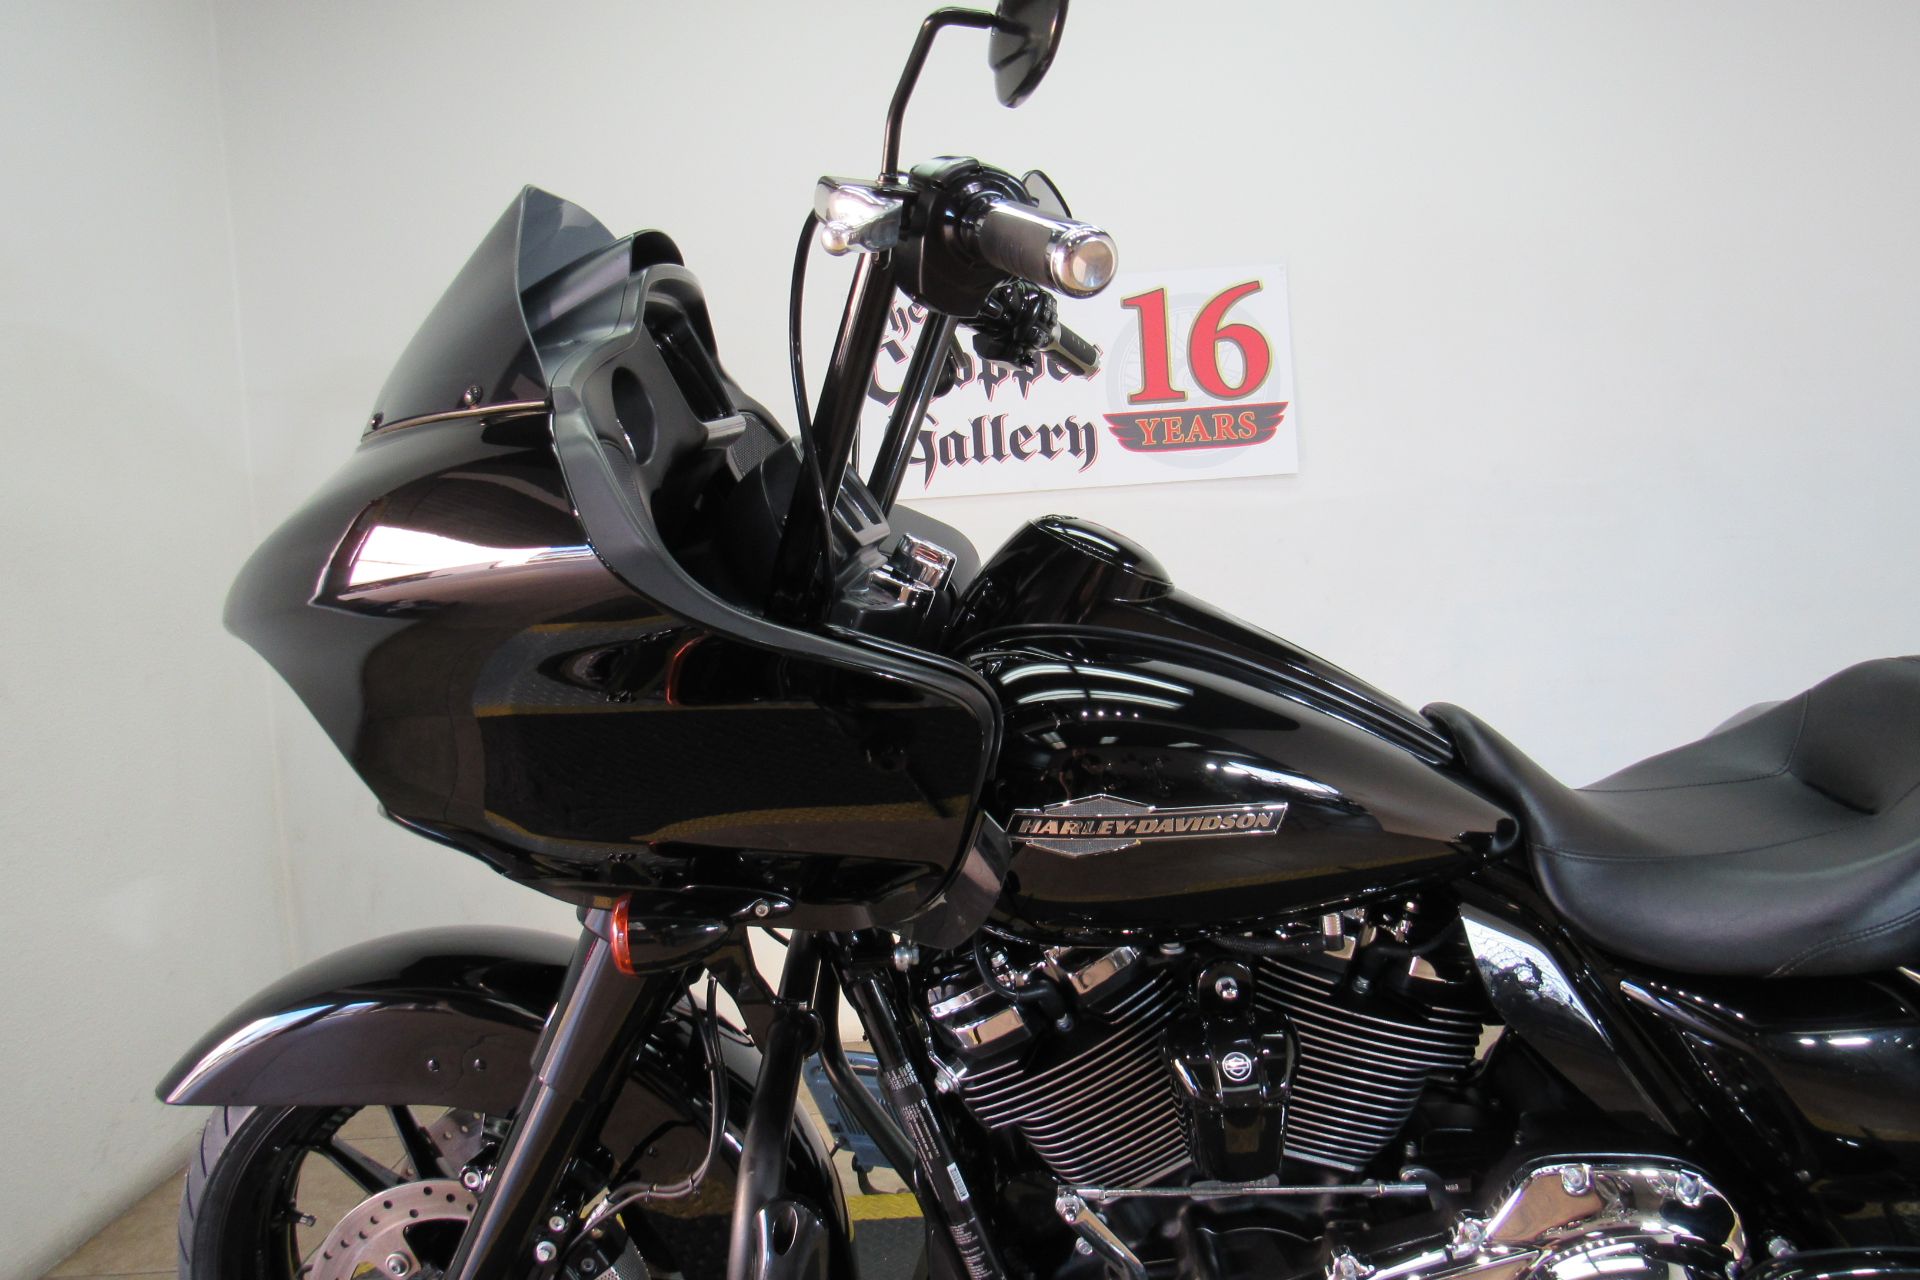 2021 Harley-Davidson Road Glide® in Temecula, California - Photo 4